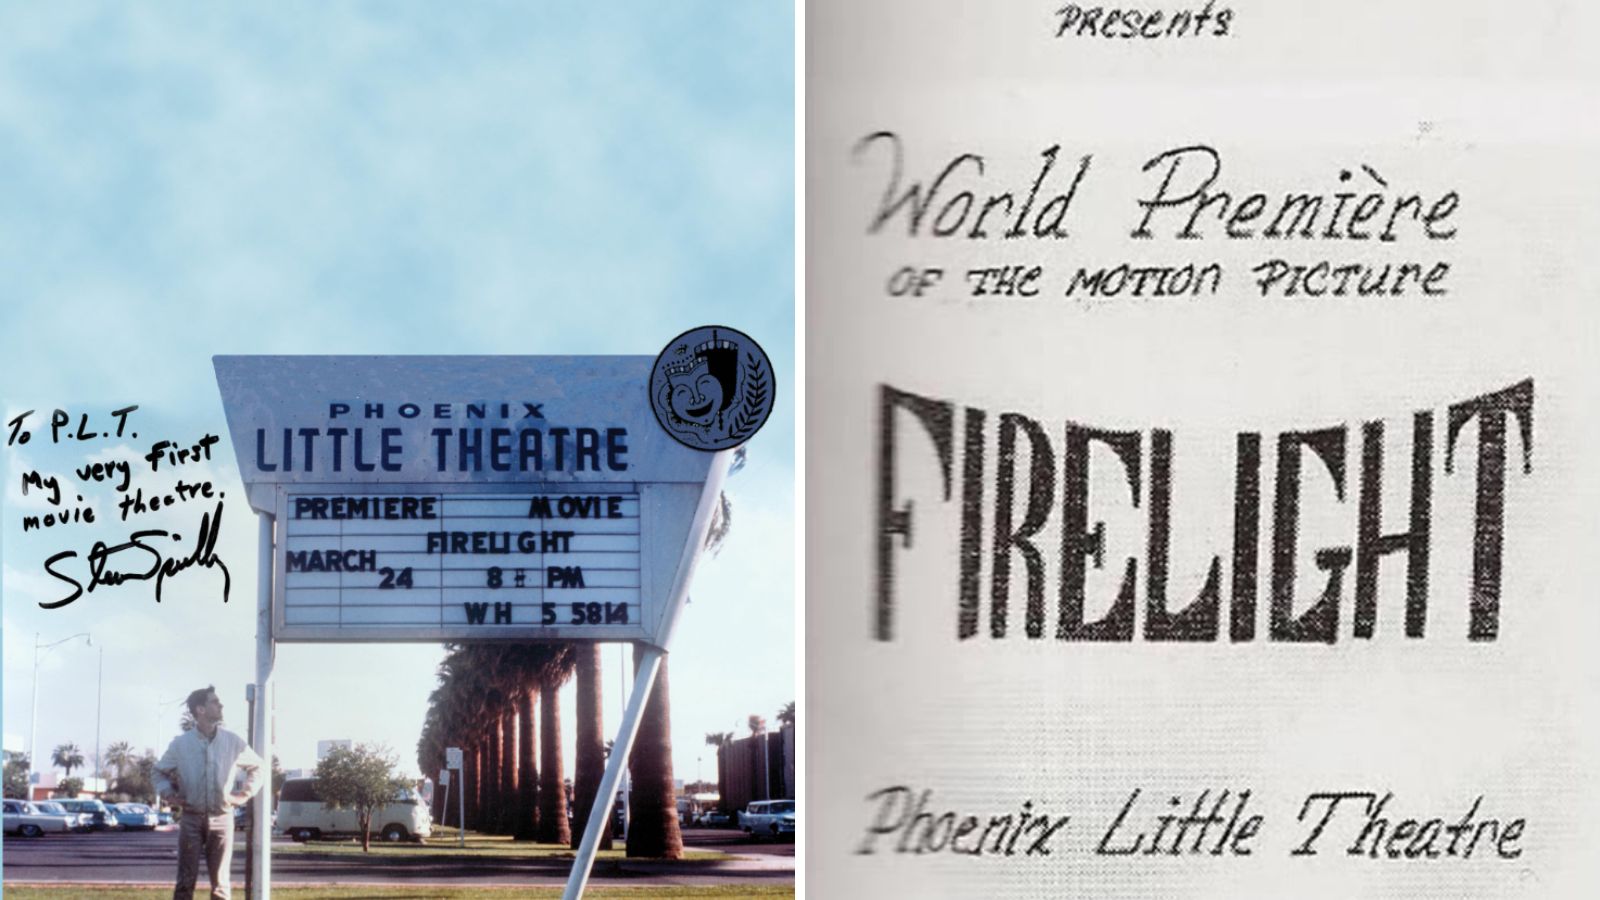 Phoenix Little Theater where Steven Spielberg premiered first film...